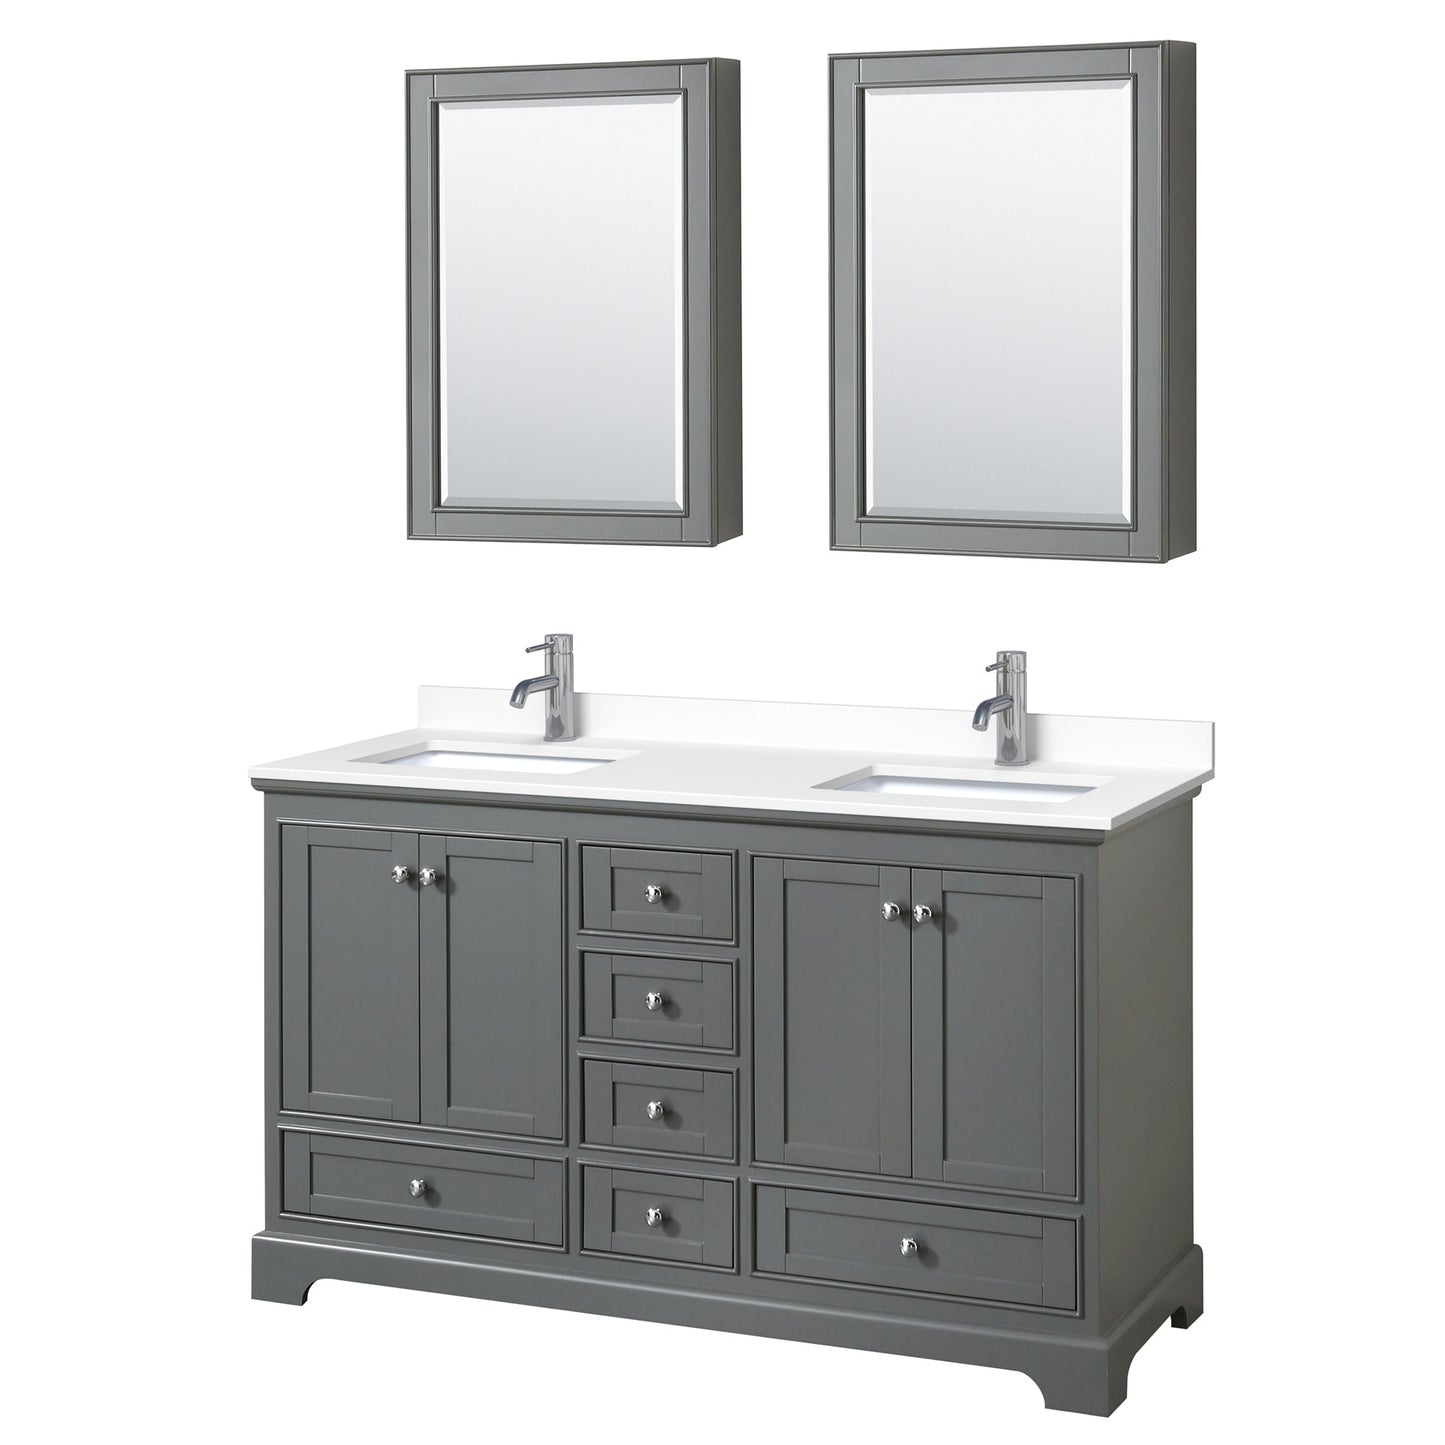 Wyndham Collection Deborah 60" Double Bathroom Vanity in Dark Gray, White Cultured Marble Countertop, Undermount Square Sinks, Medicine Cabinet